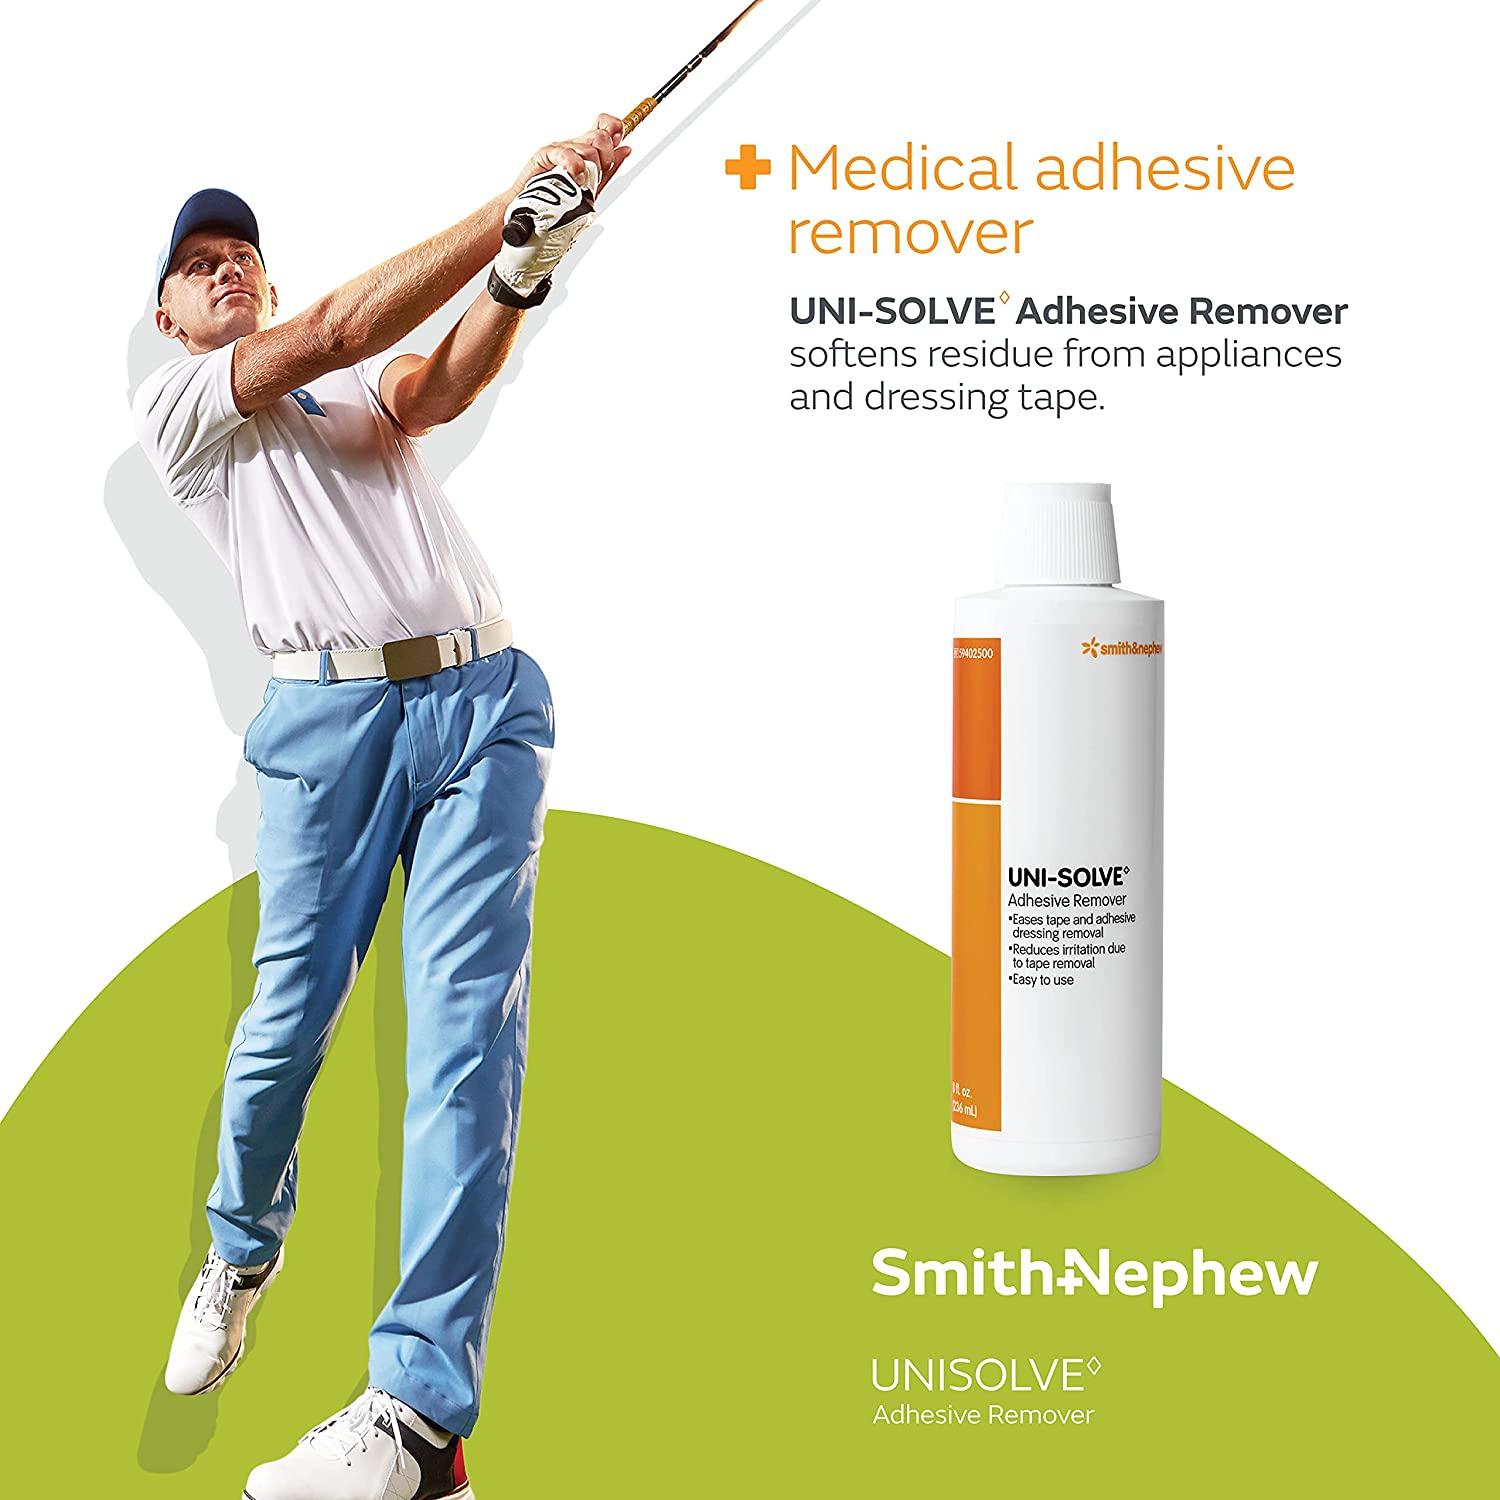 Smith & Nephew UNI-SOLVE Adhesive Remover, Medical Adhesive